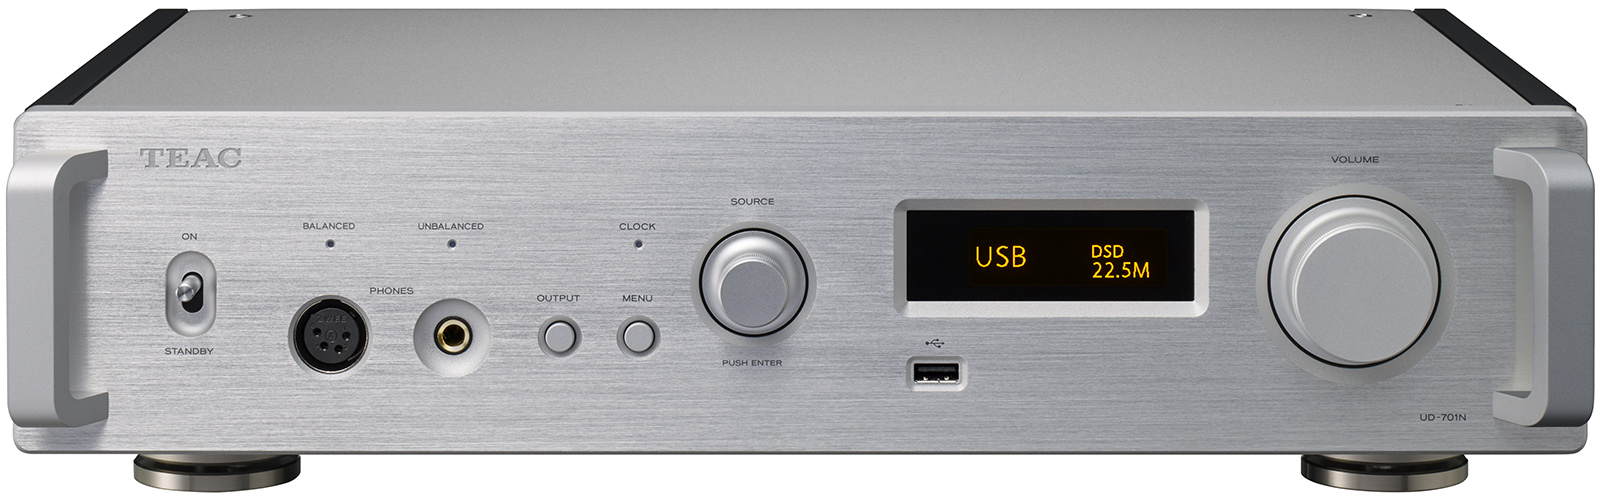 USB ЦАП/сетевой плеер Teac UD-701N silver